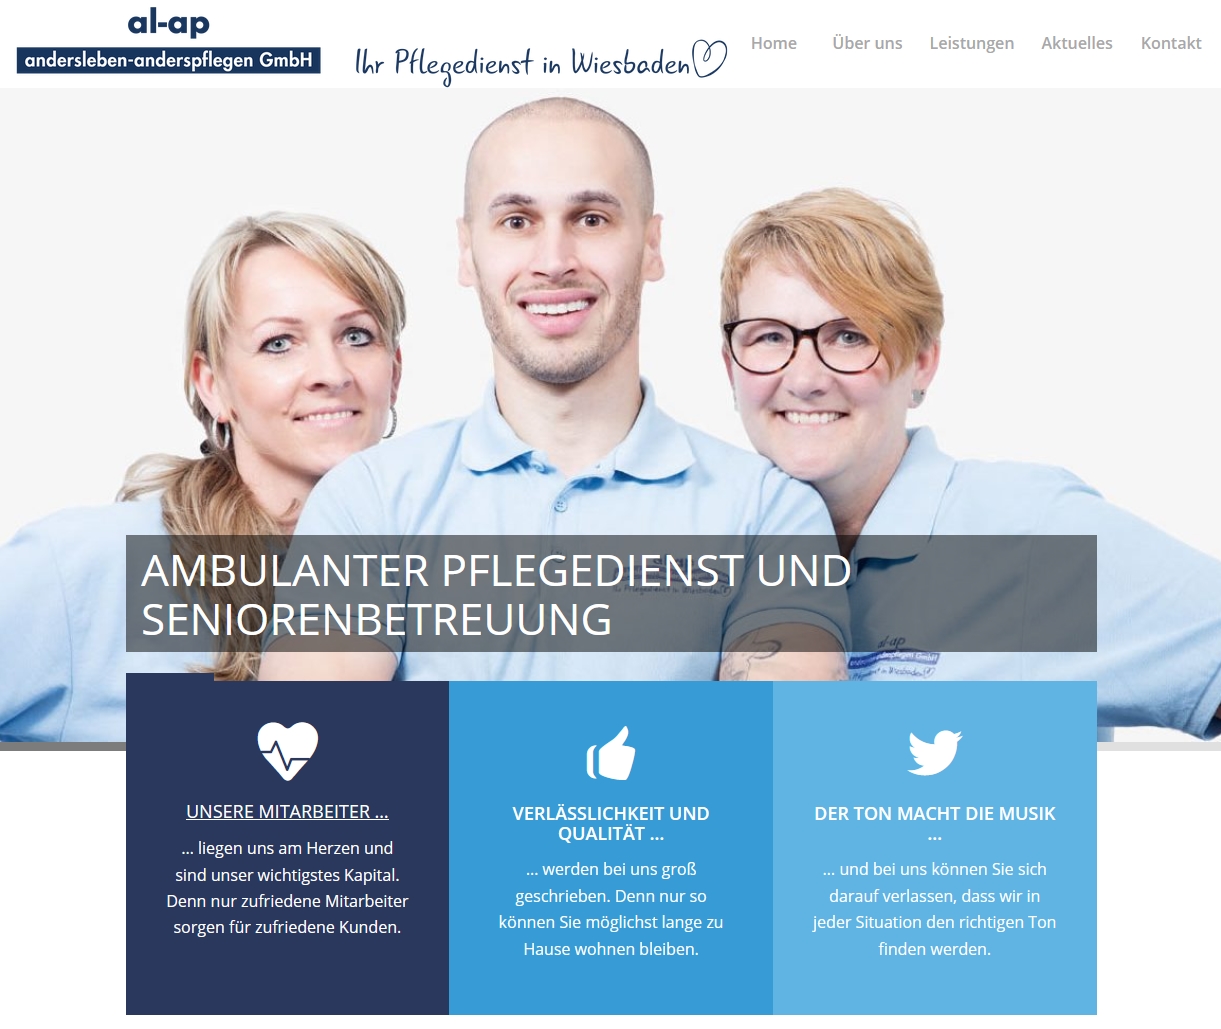 al-ap andersleben- anderspflegen GmbH Ambulanter Pflegedienst